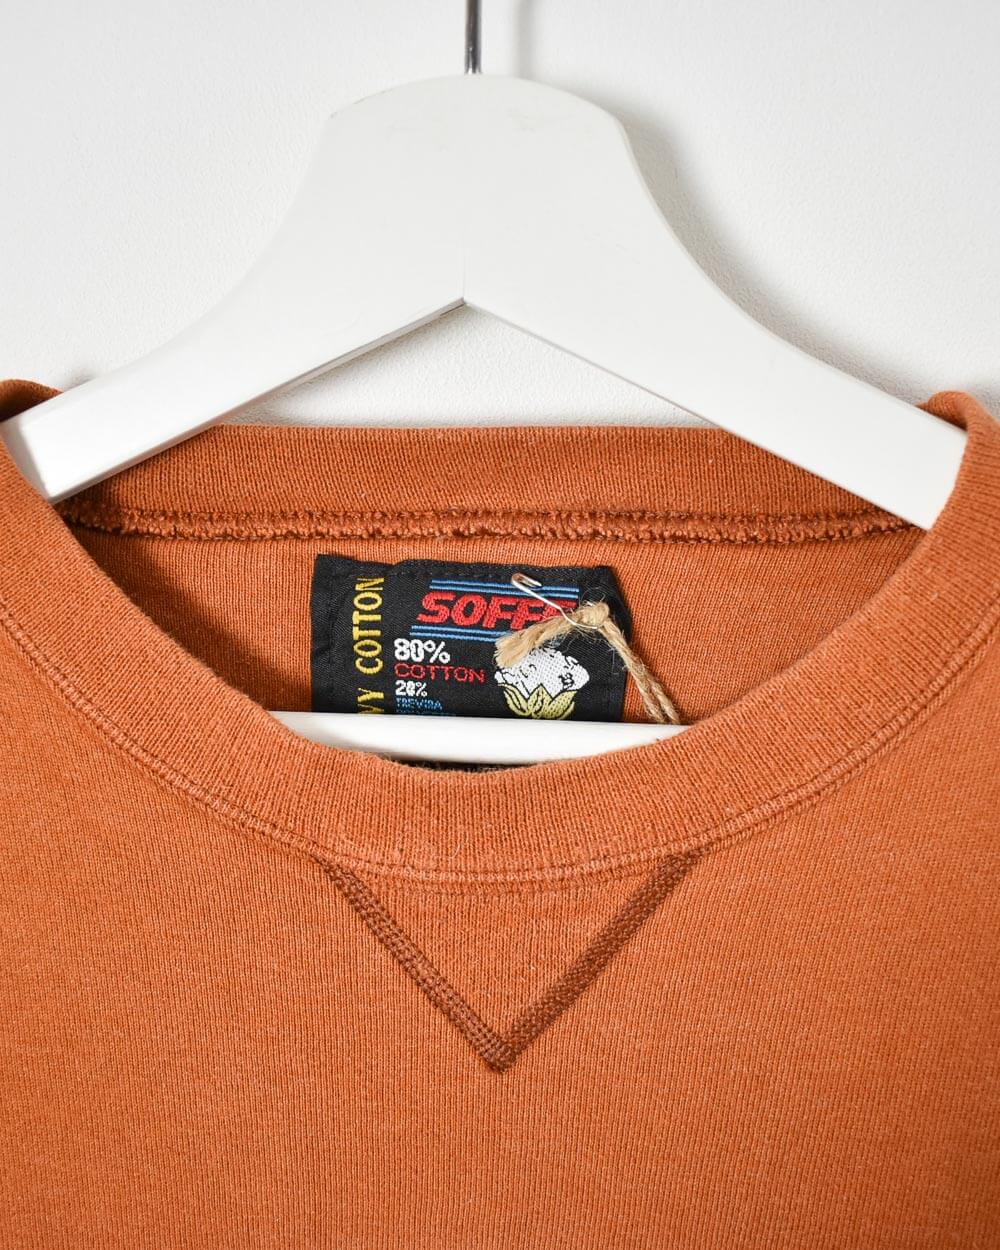 Soffe Texas Sweatshirt - Large - Domno Vintage 90s, 80s, 00s Retro and Vintage Clothing 